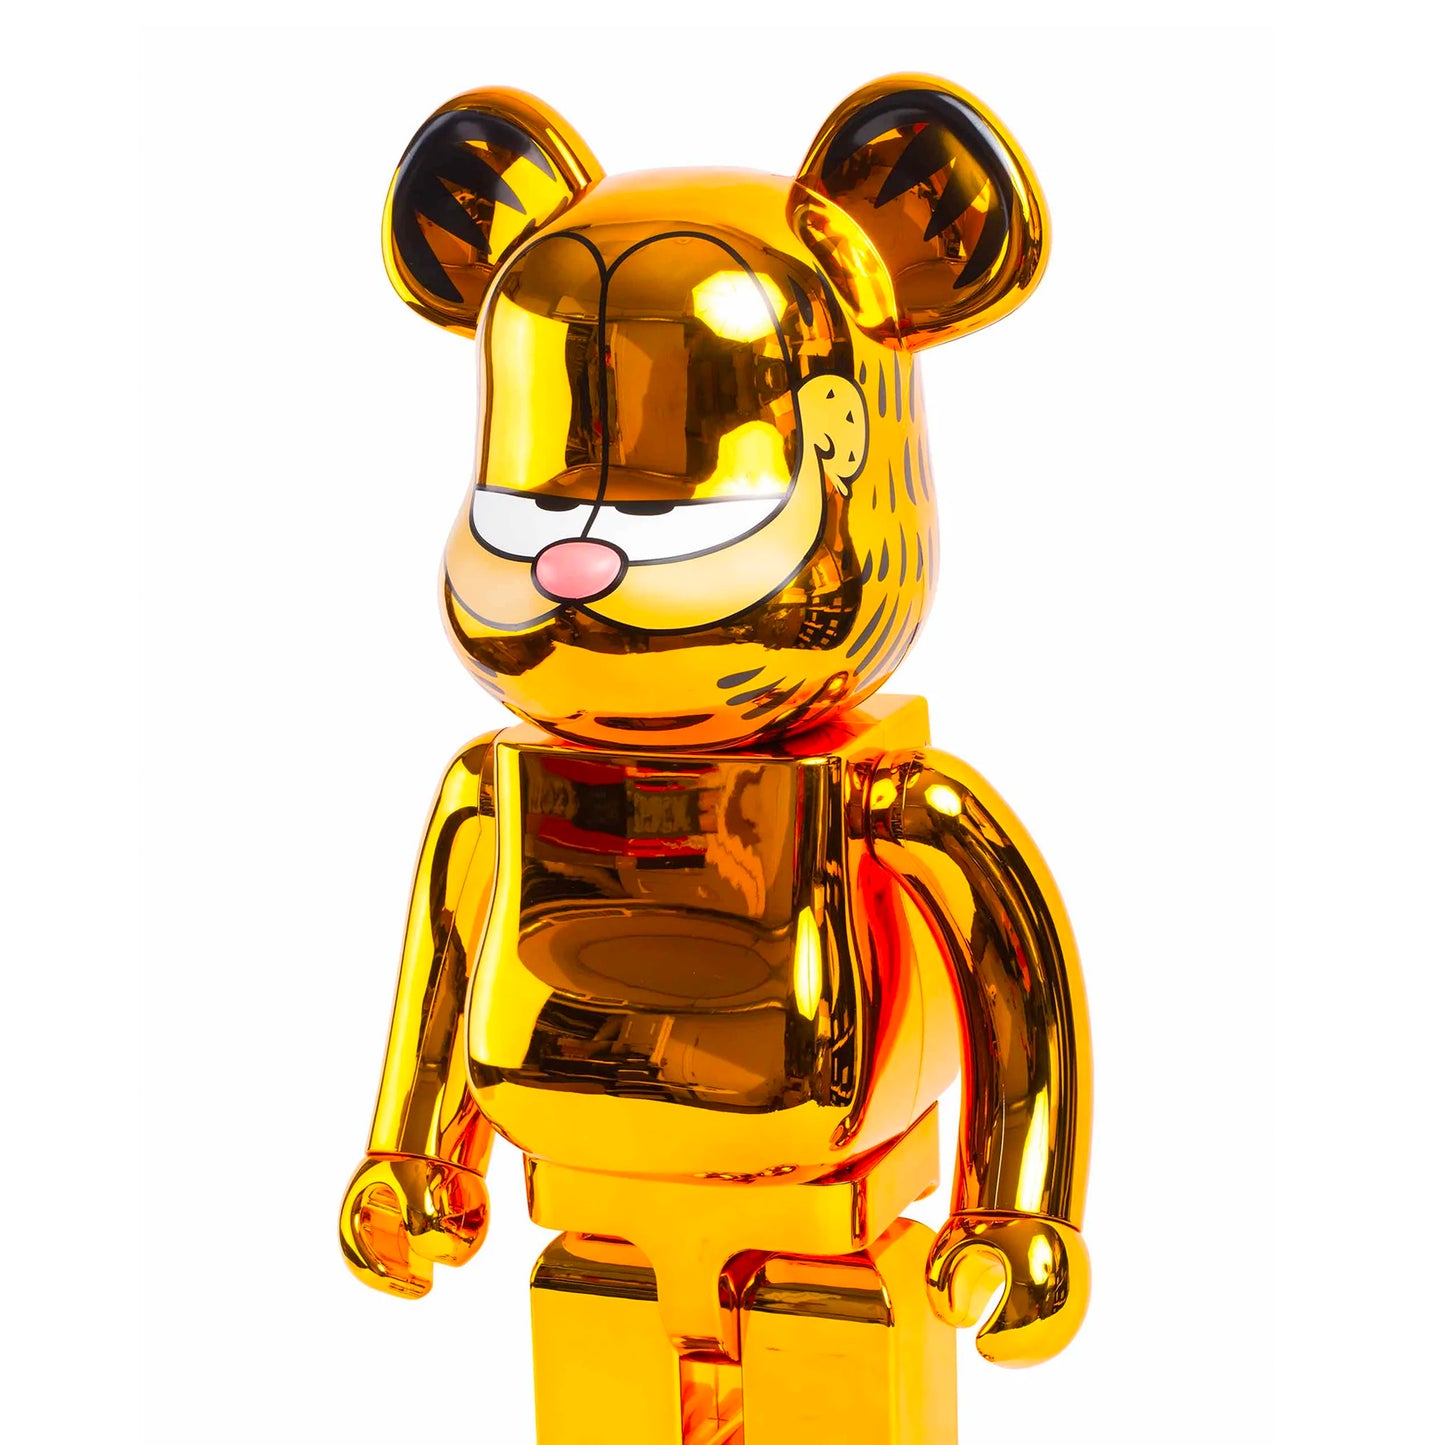 MEDICOM TOY: BE@RBRICK - Garfield Gold Chrome 1000%